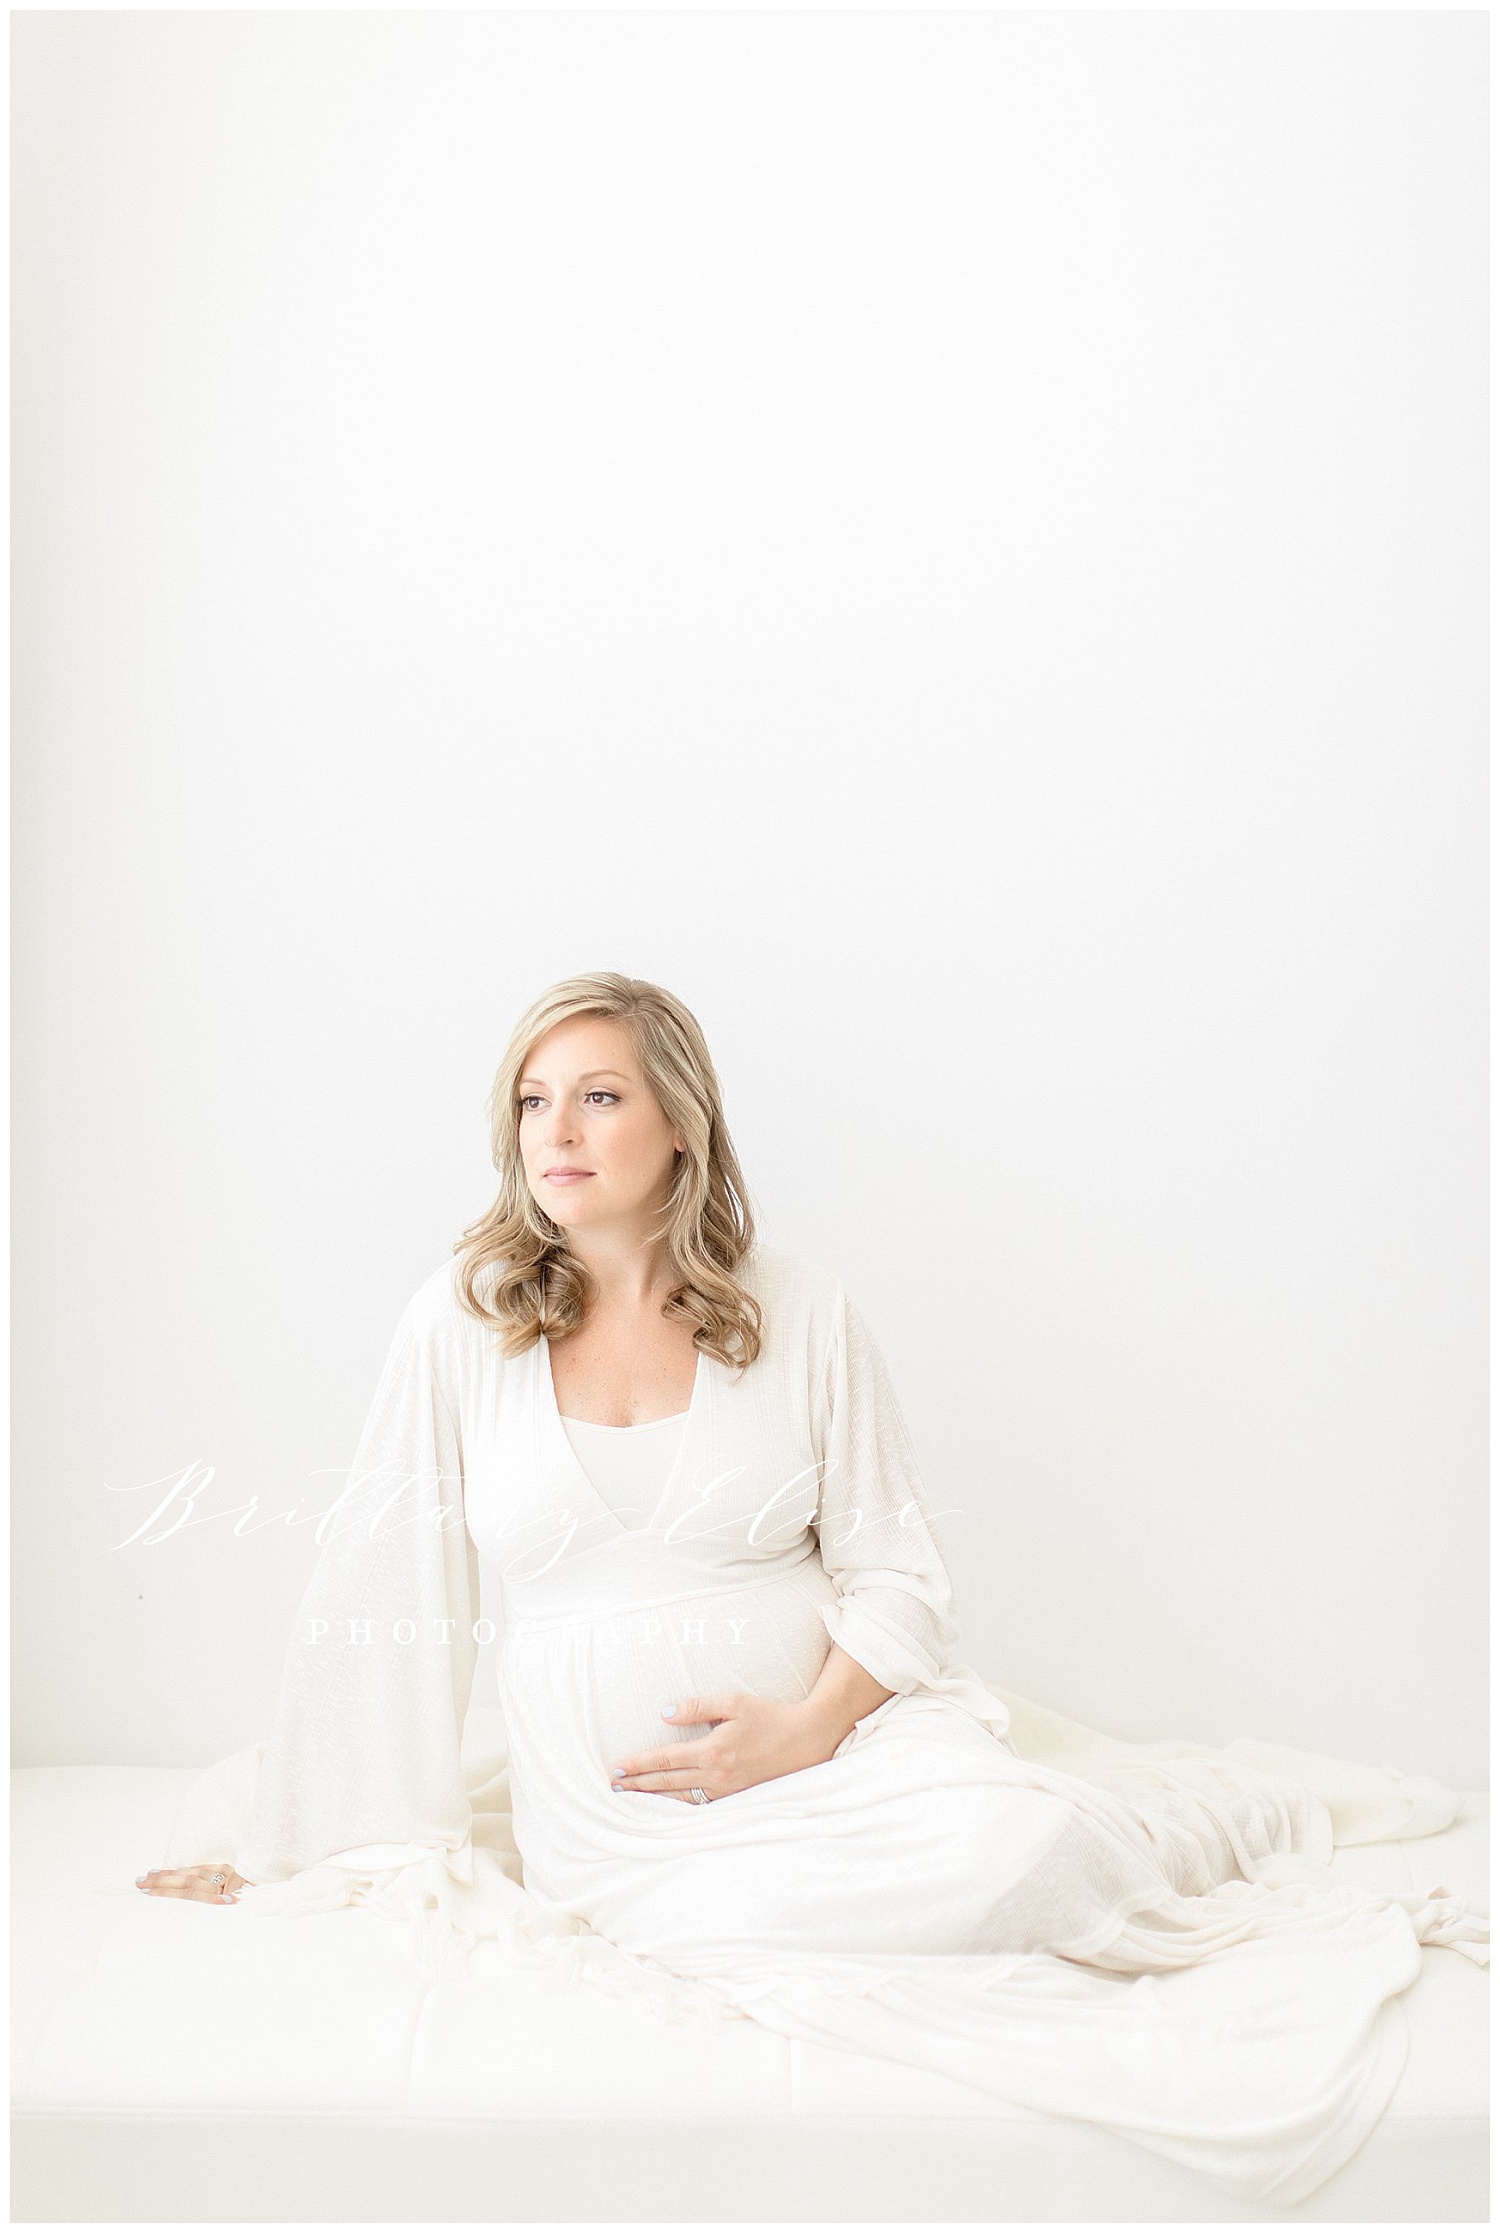 Tampa Maternity Studio Photographer